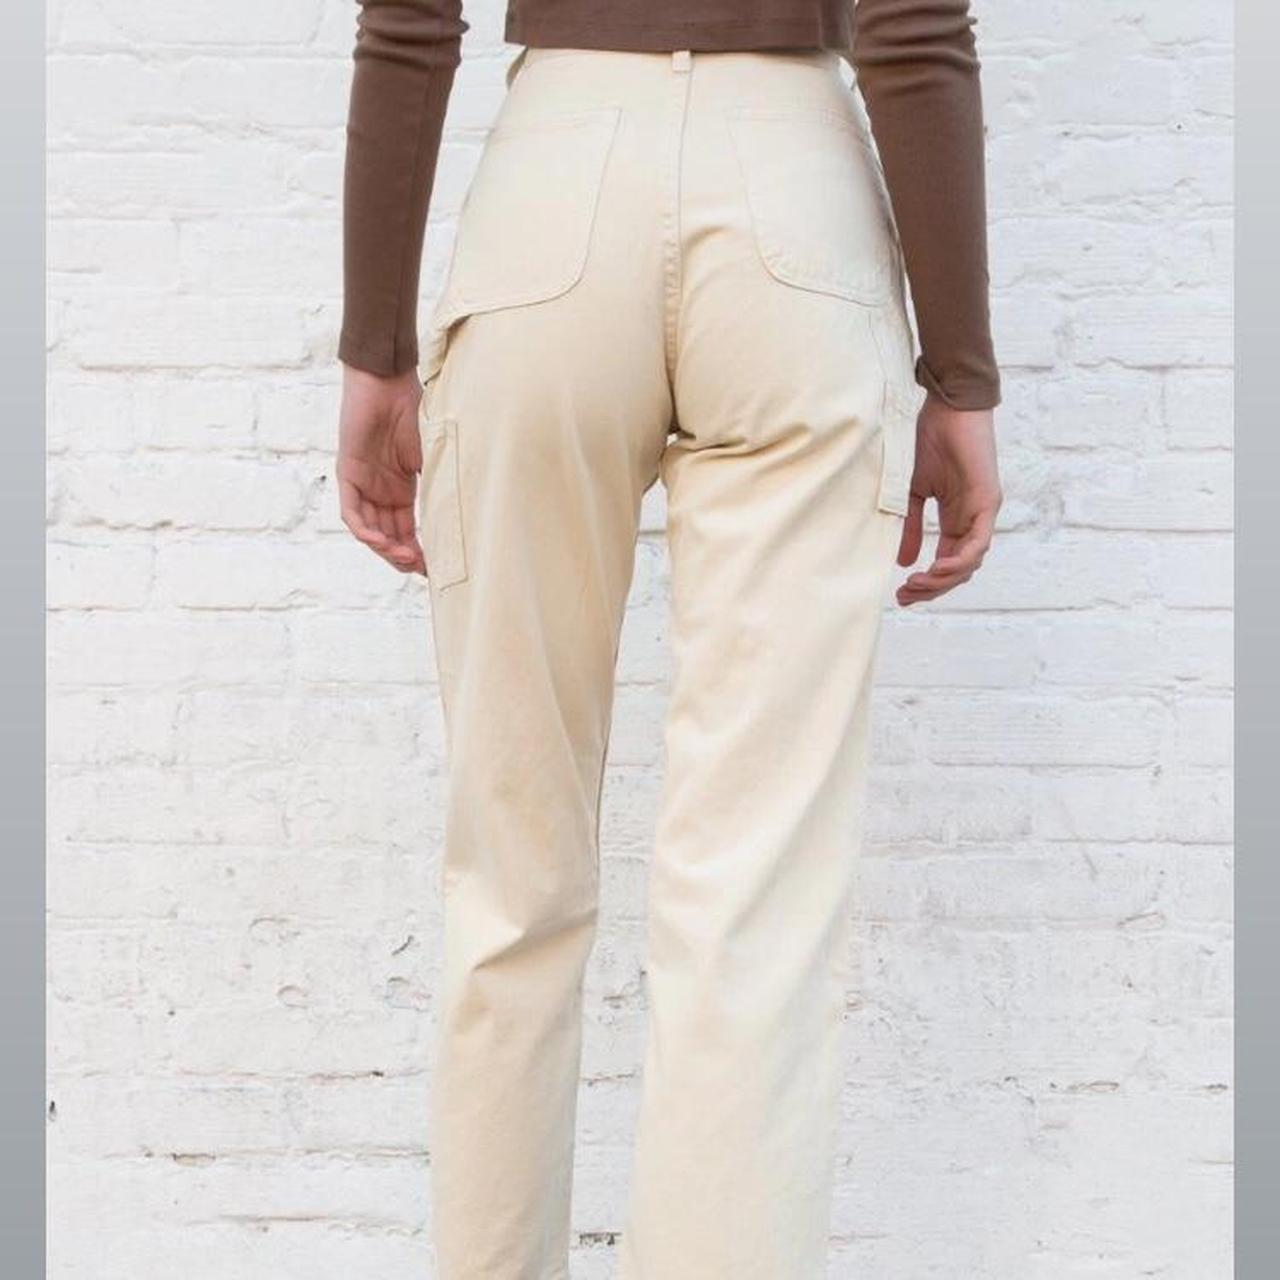 Brandy Melville Tami cargo/ carpenter trousers Have... - Depop